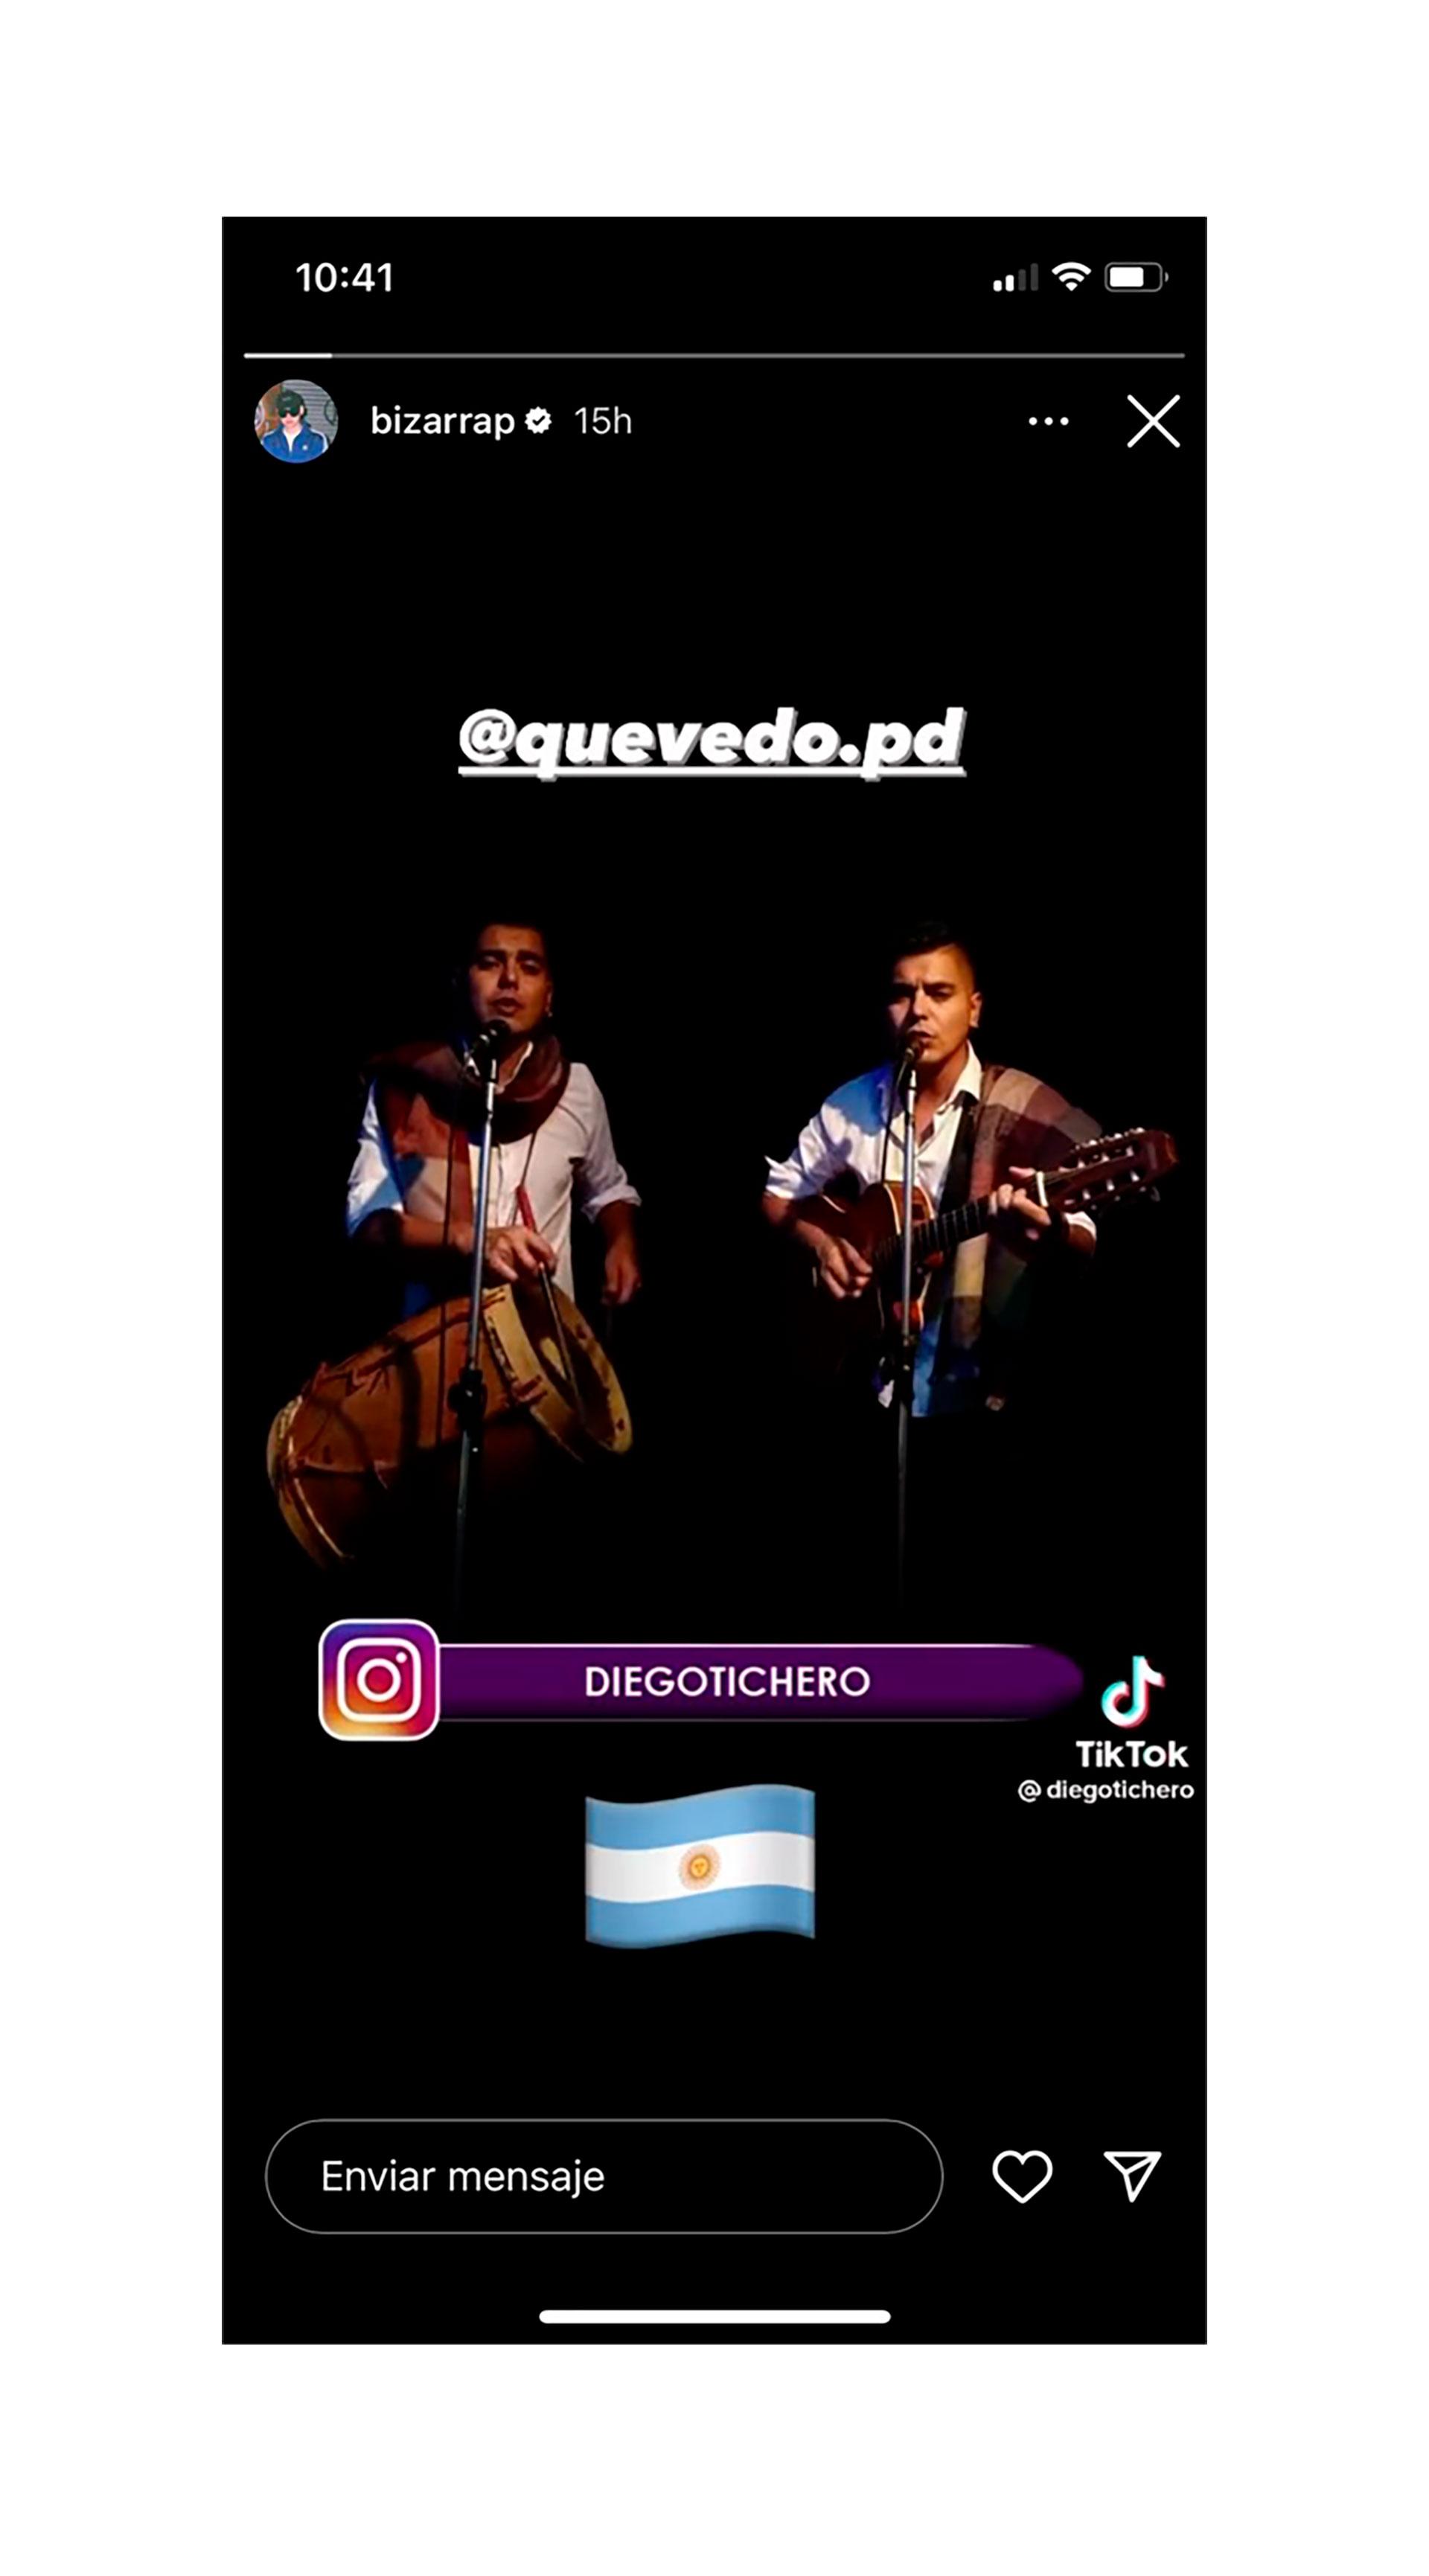 Bizarrap compartió el video de Diego Ciccozzi y lo etiquetó a Quevedo